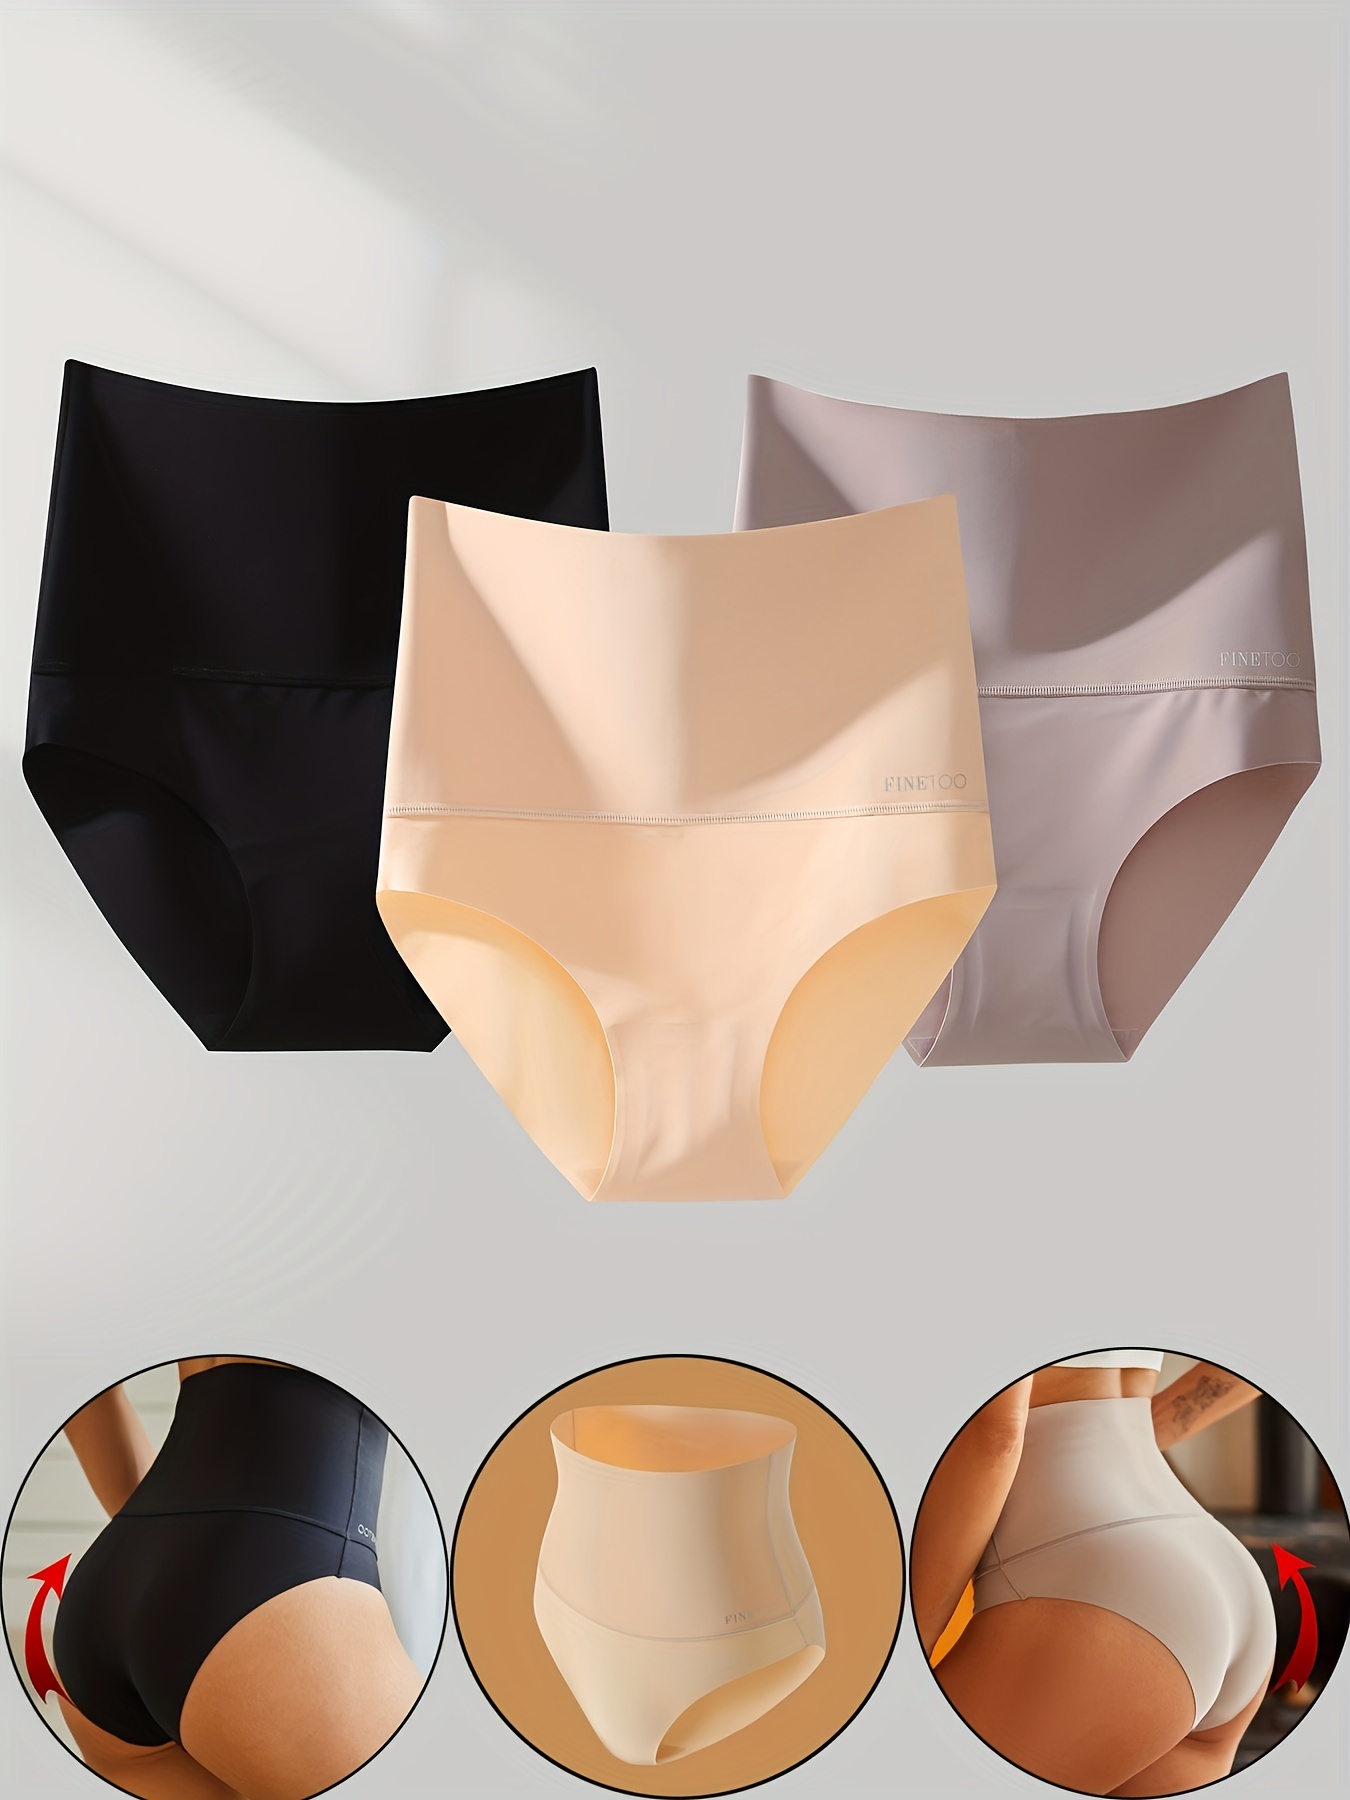 FINETOO 3pack Solid High Waist Seamless Panty Set